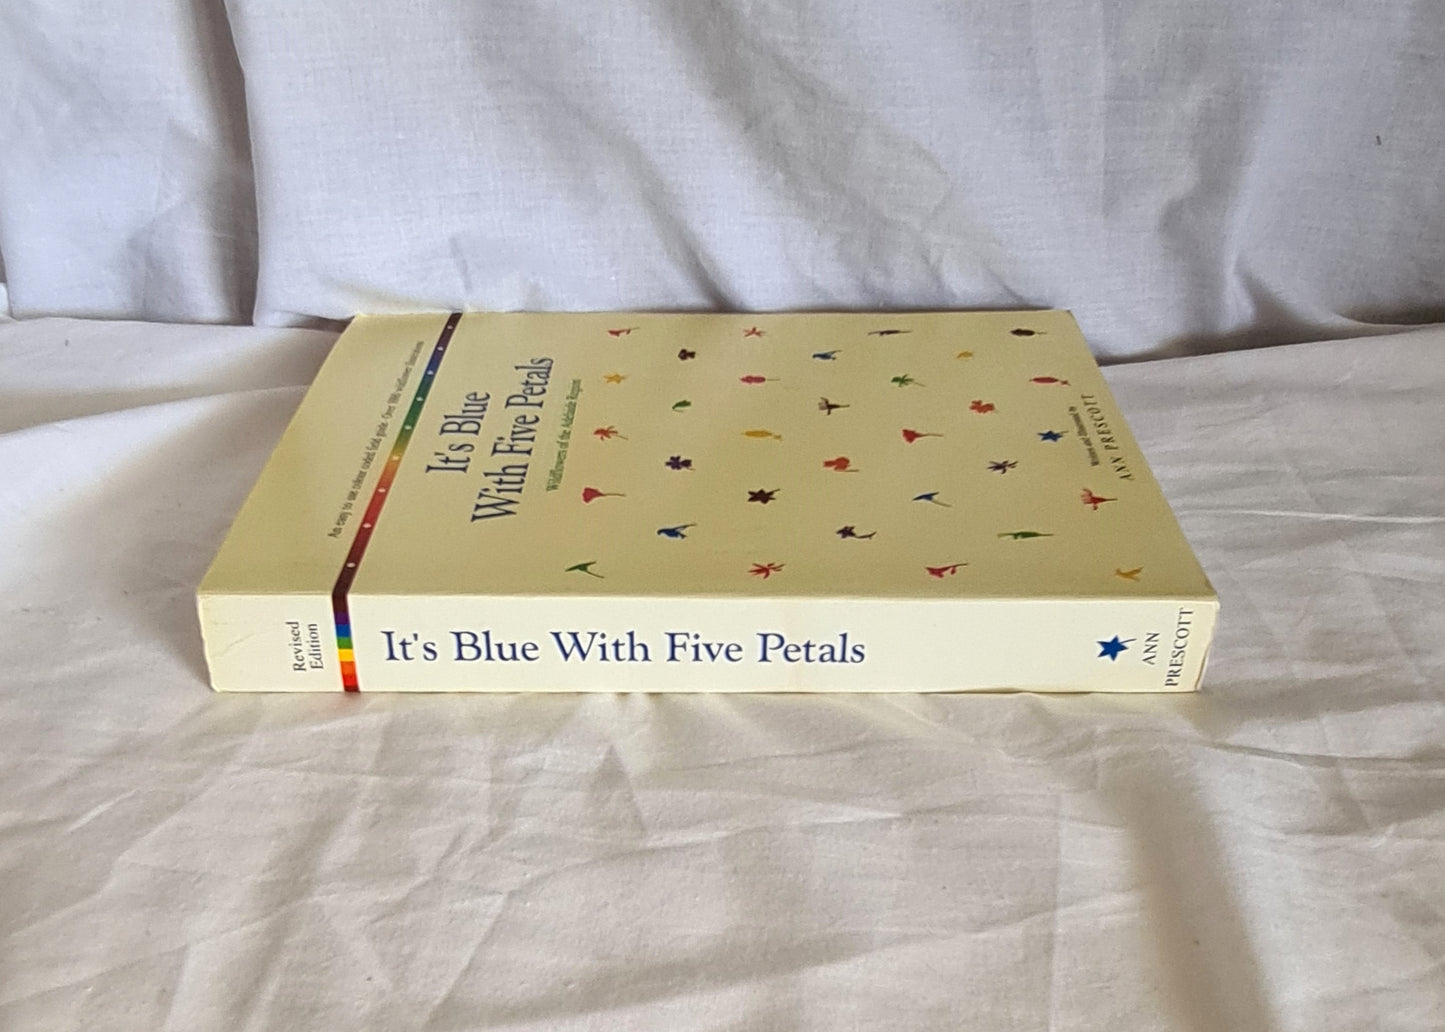 It’s Blue With Five Petals by Ann Prescott